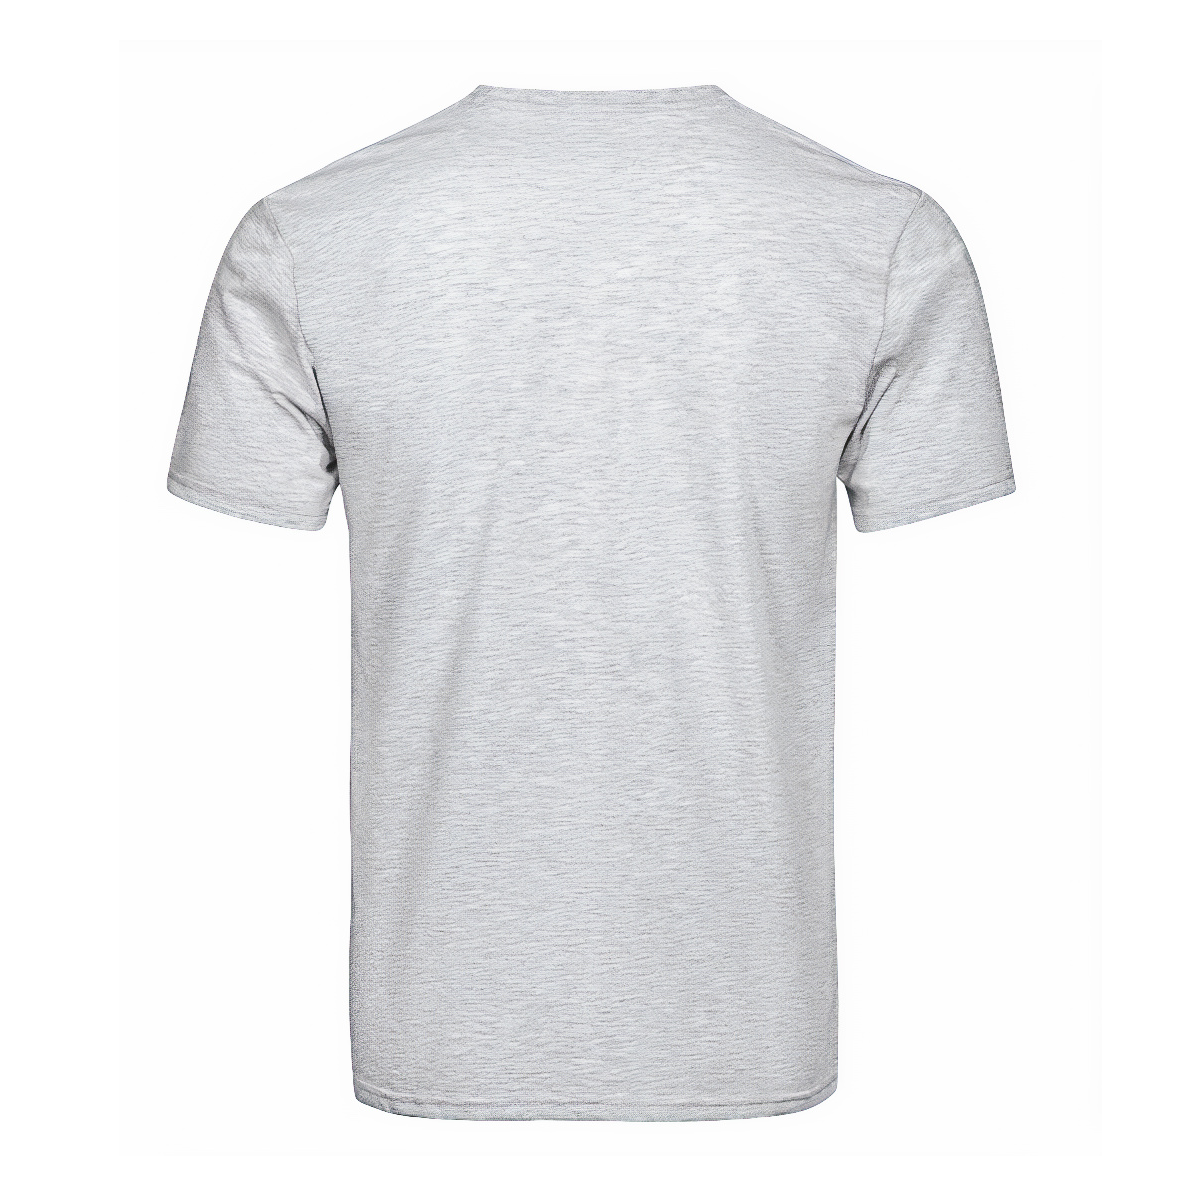 Middleton Tartan Crest T-shirt - I'm not yelling style